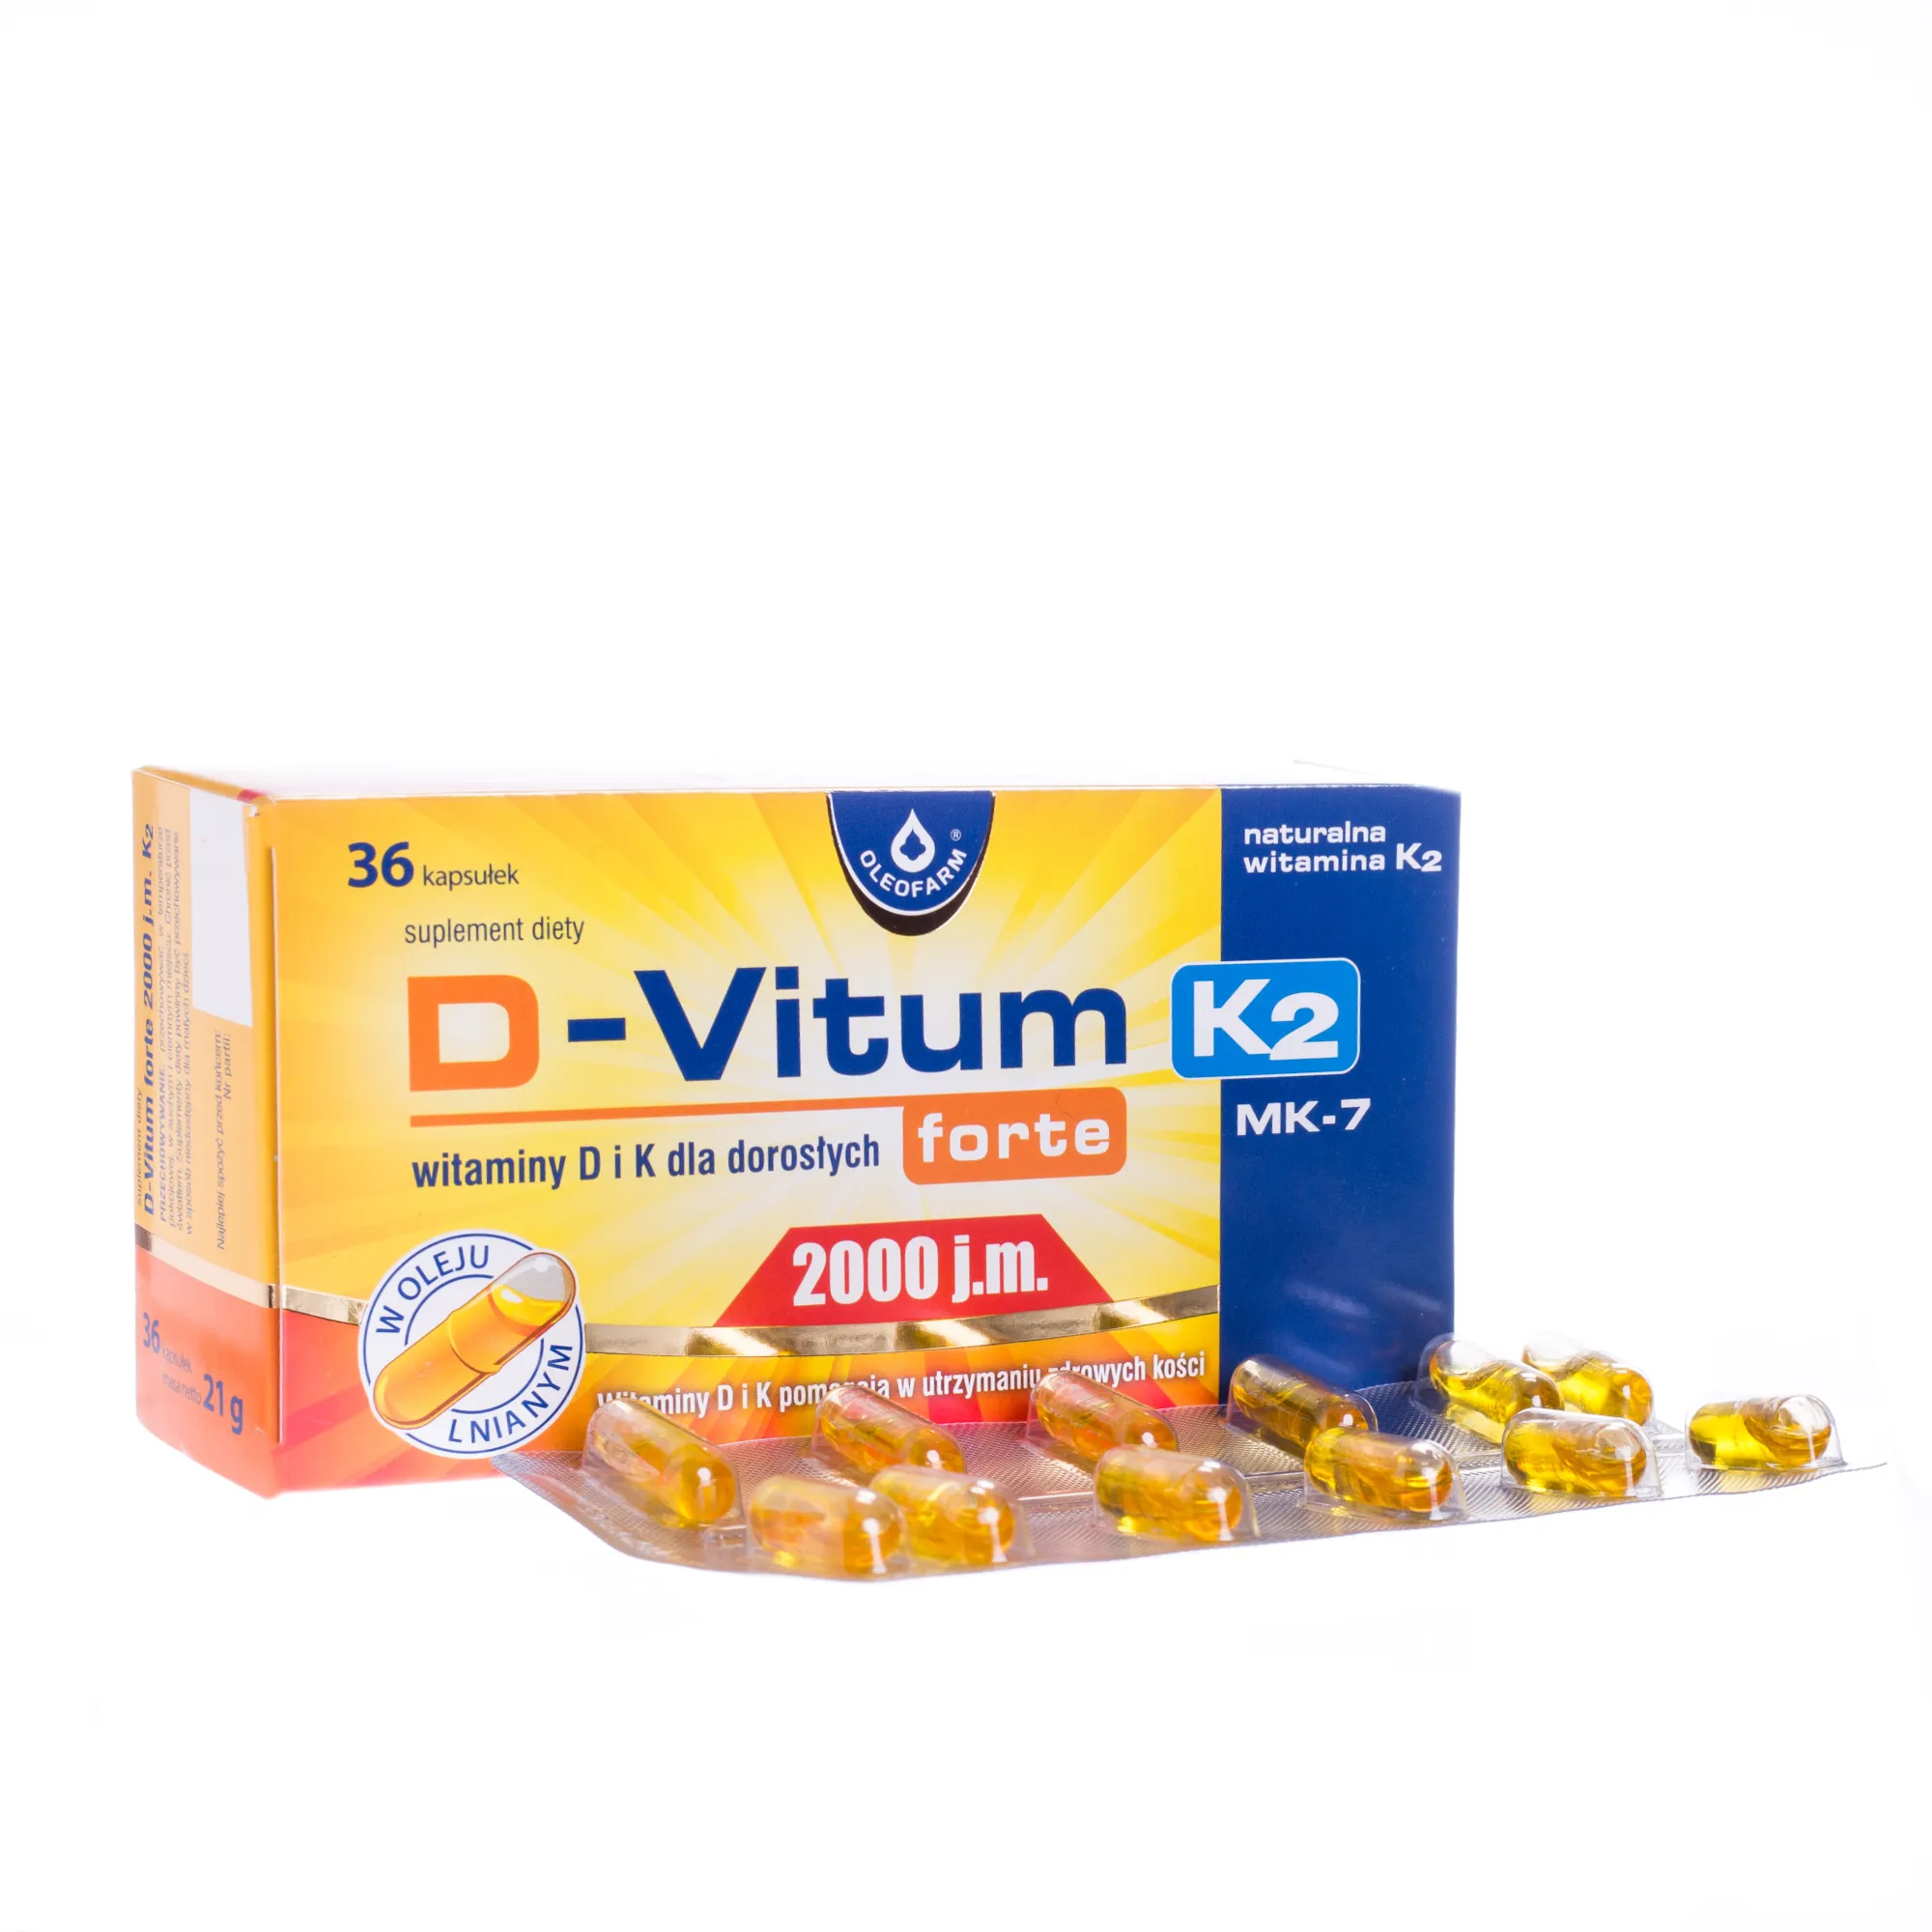 D-Vitum Forte 2000 j.m. K2 , suplement diety, 36 kapsułek